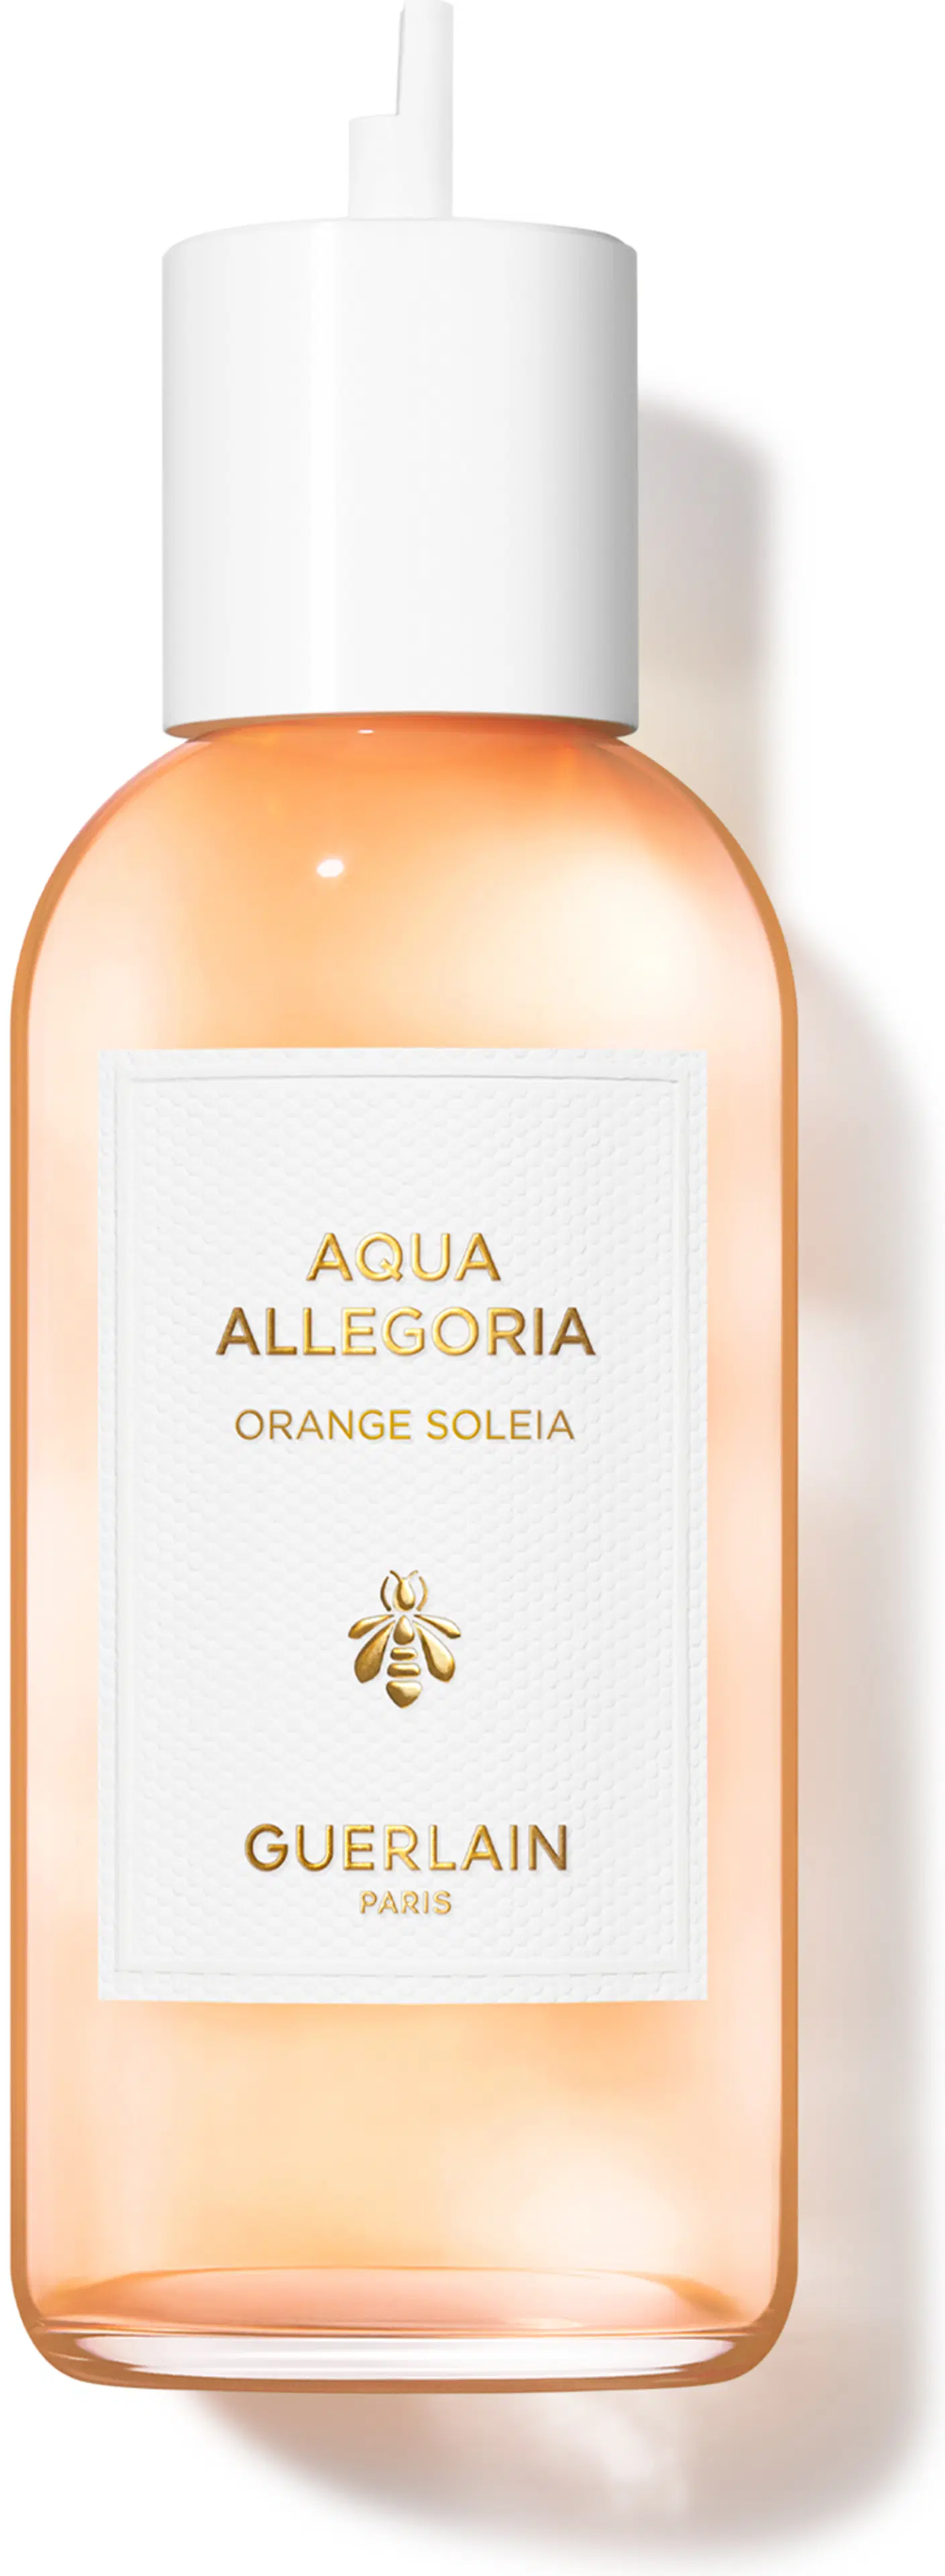 Guerlain Aqua Allegoria Orange Soleia EDT refill 200 ml